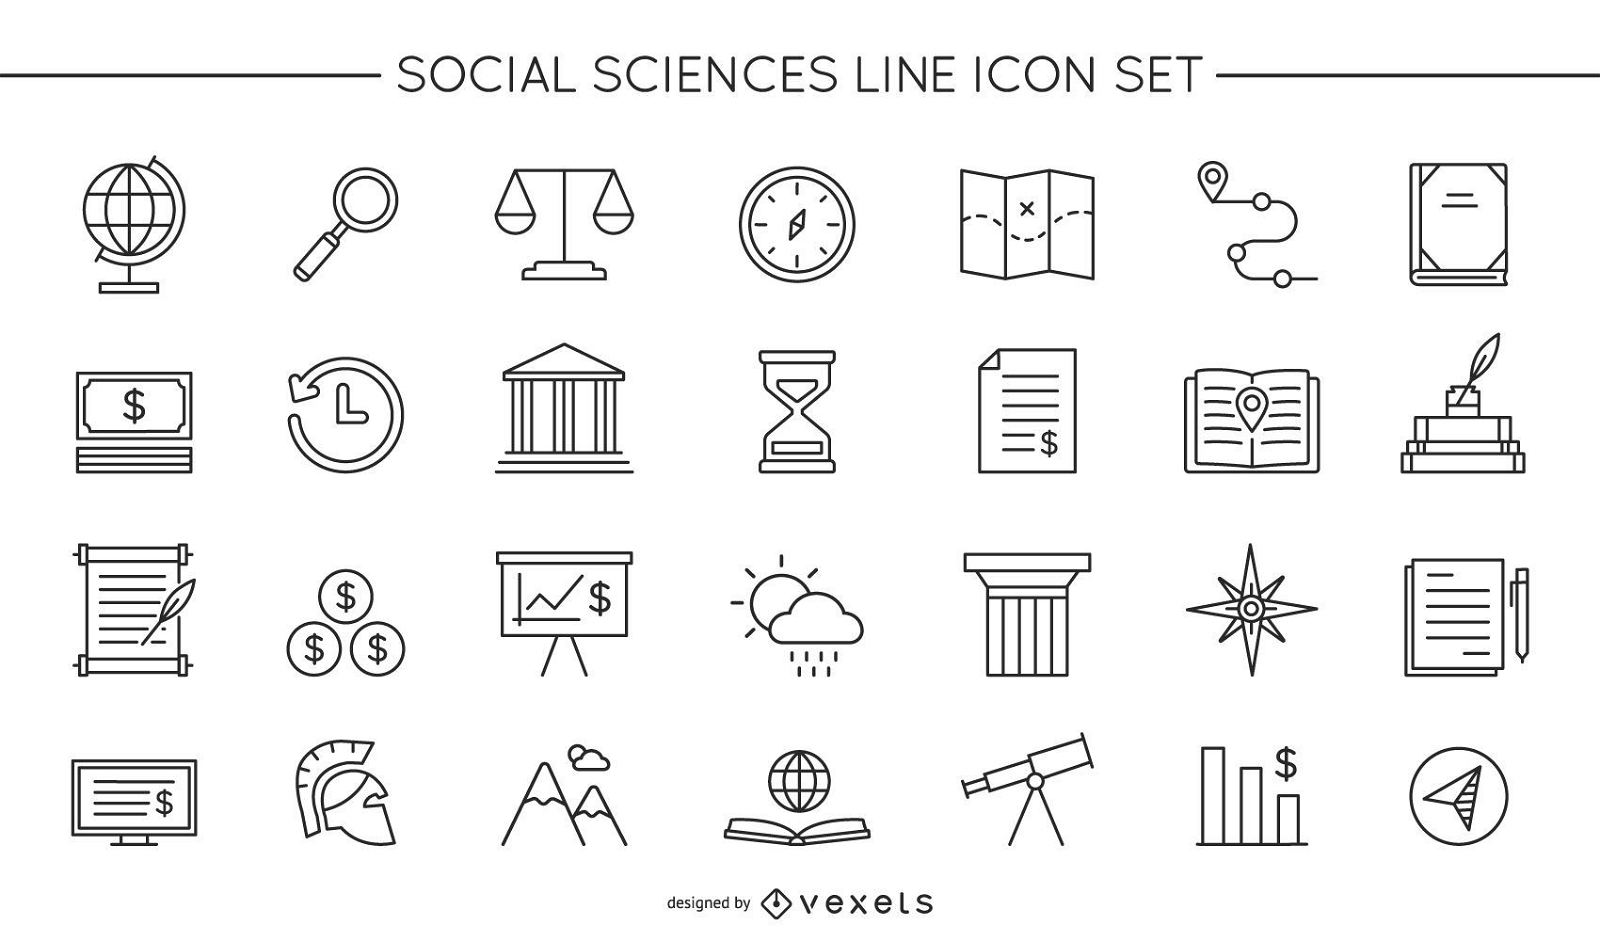 Social sciences line icon set